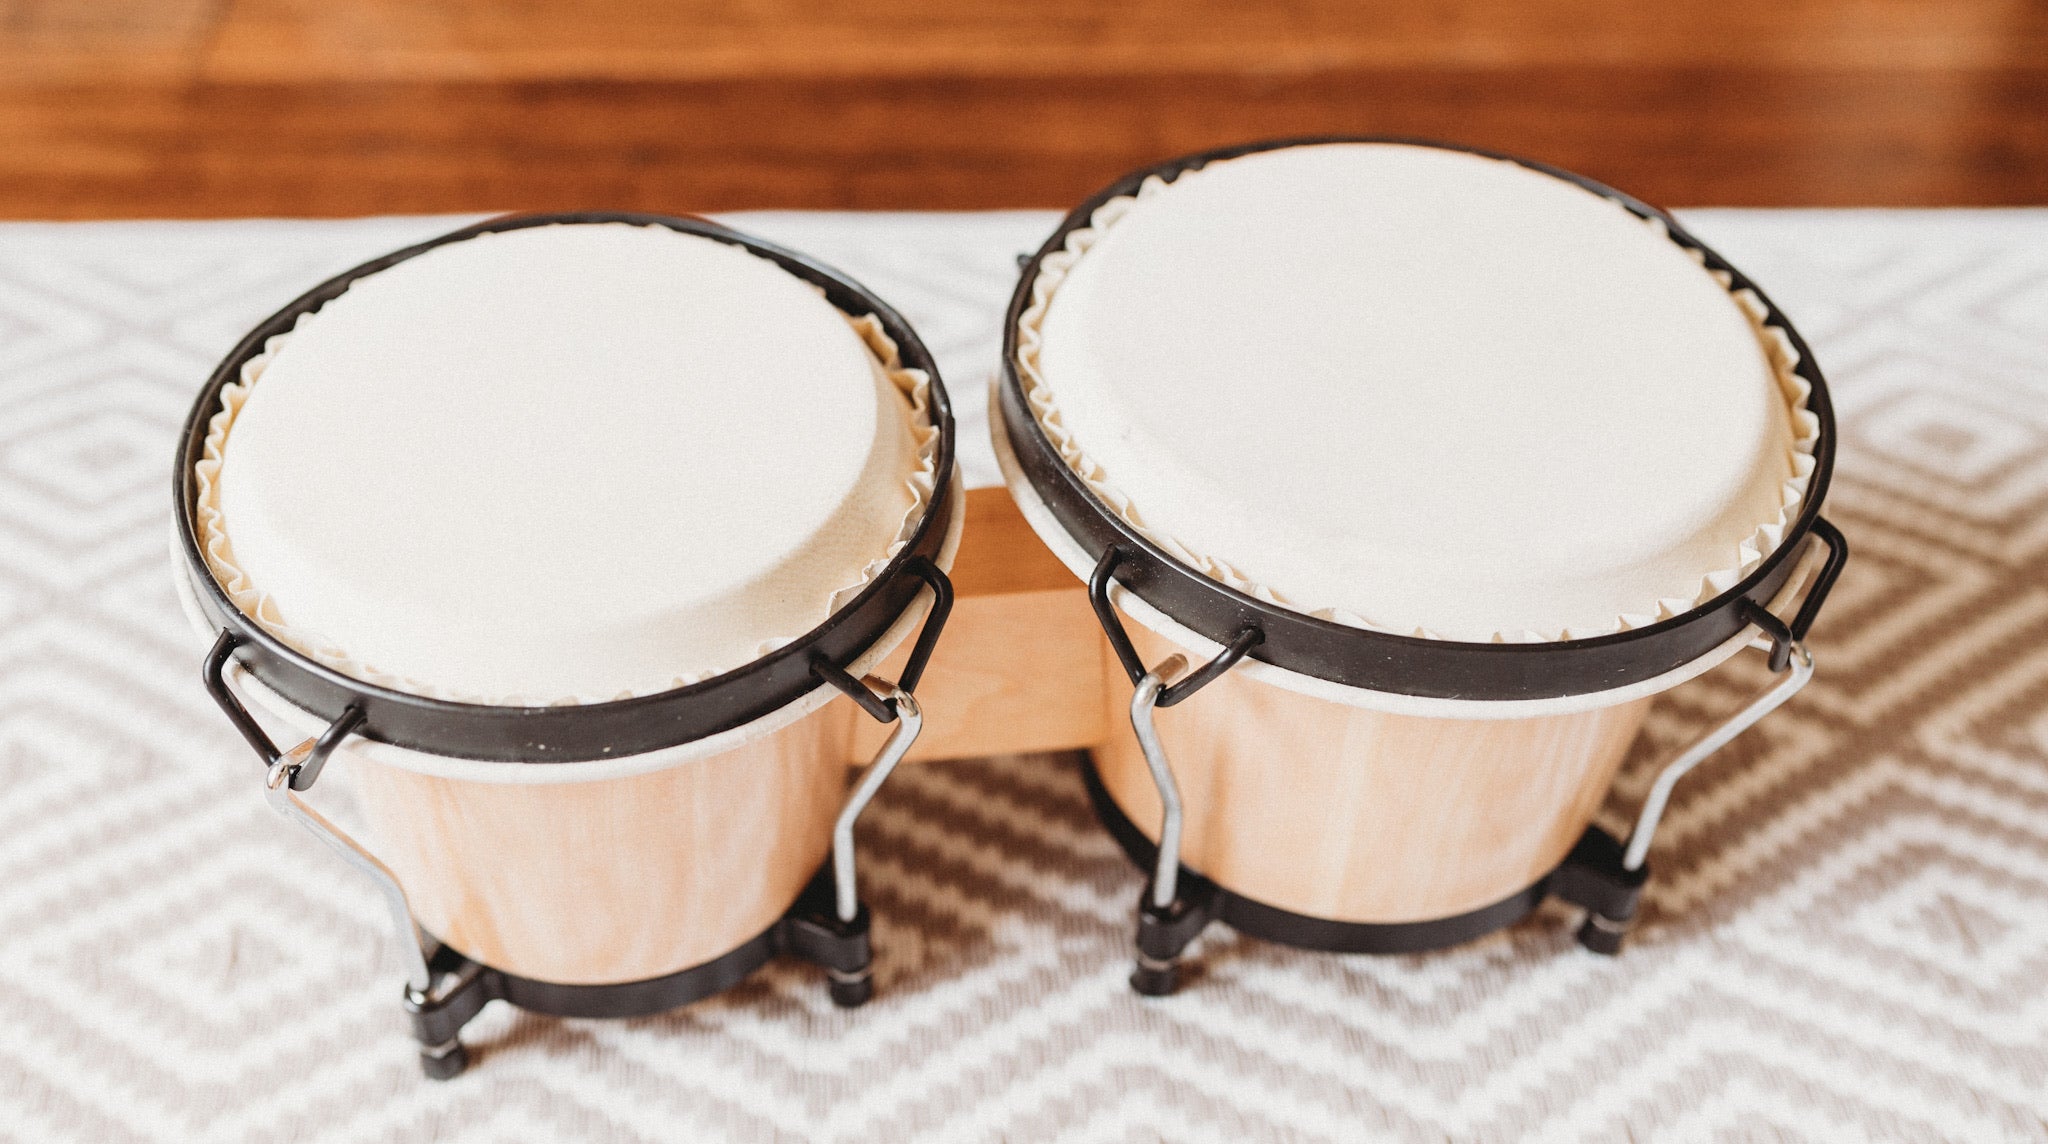 Sharome Bongo Drums